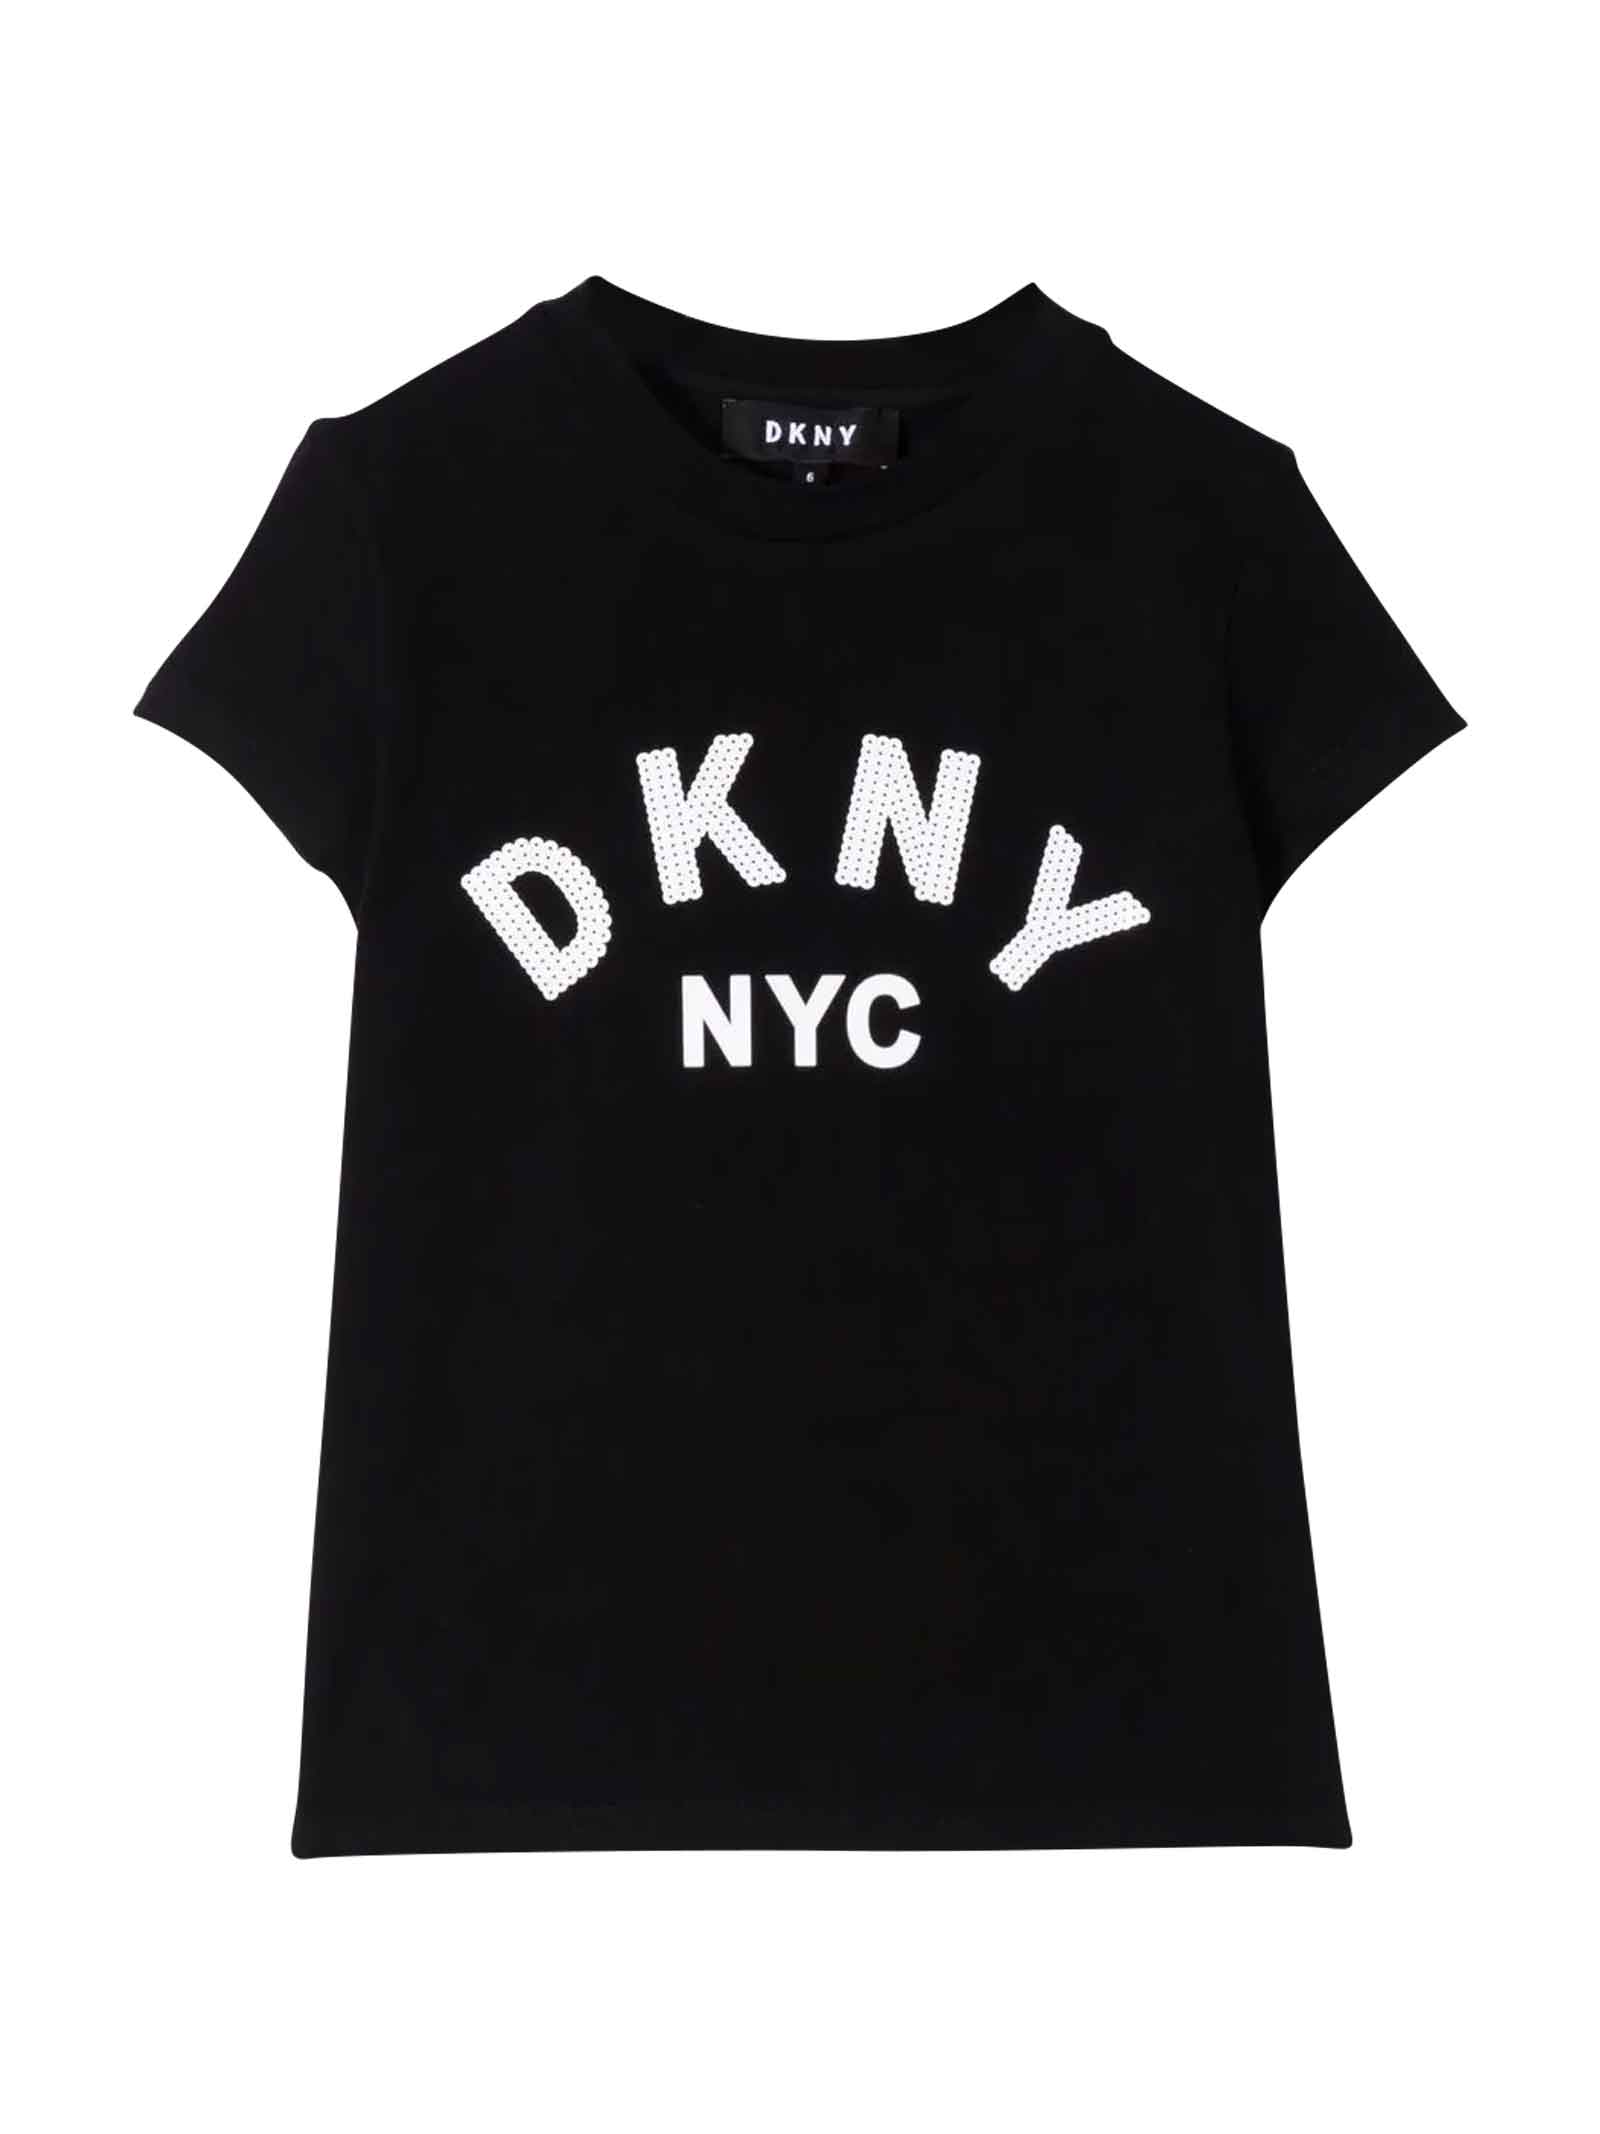 DKNY Unisex Black T-shirt